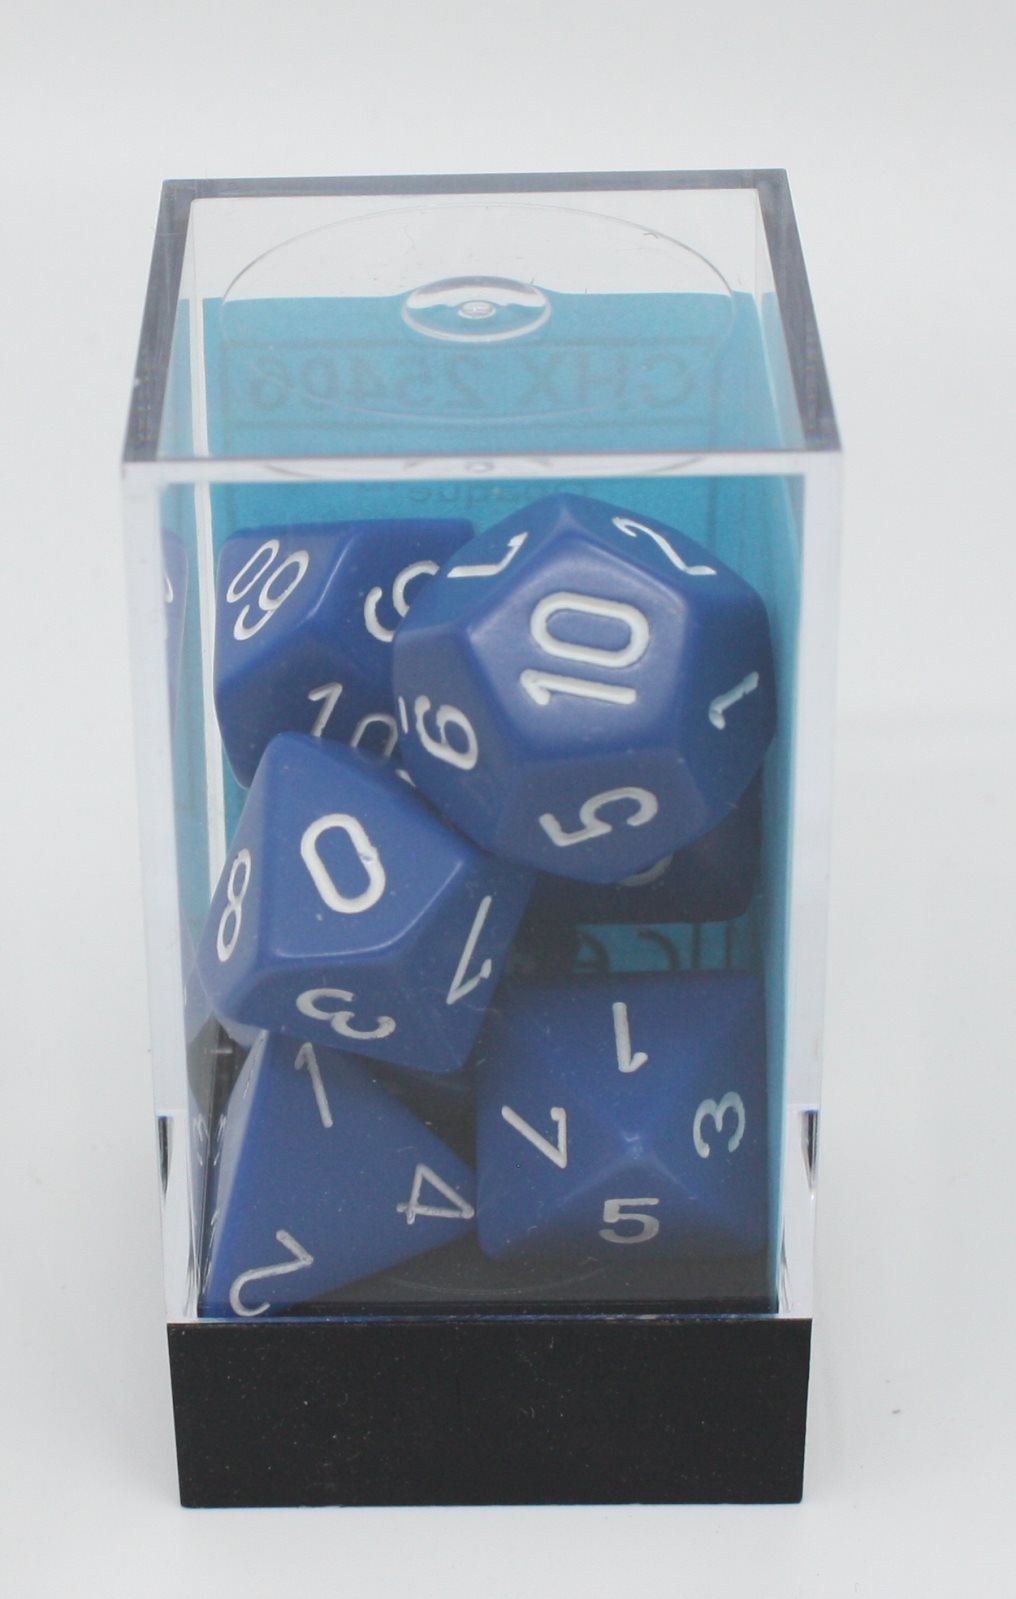 Chessex 25406 Opaque Blue/White Polyhedral 7-Die Set